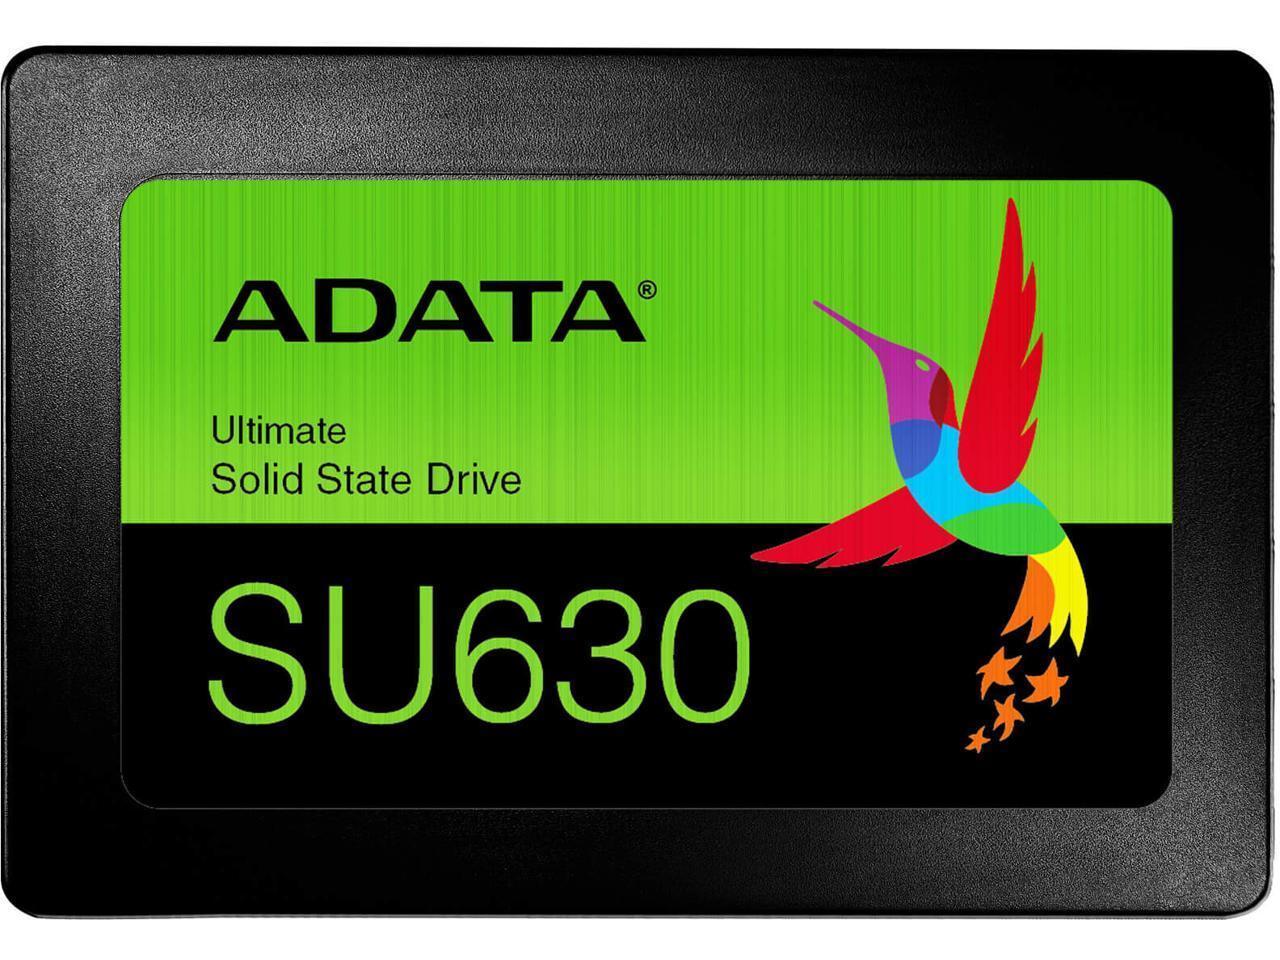 ADATA Ultimate Series: SU630 240GB Internal SATA Solid State Drive